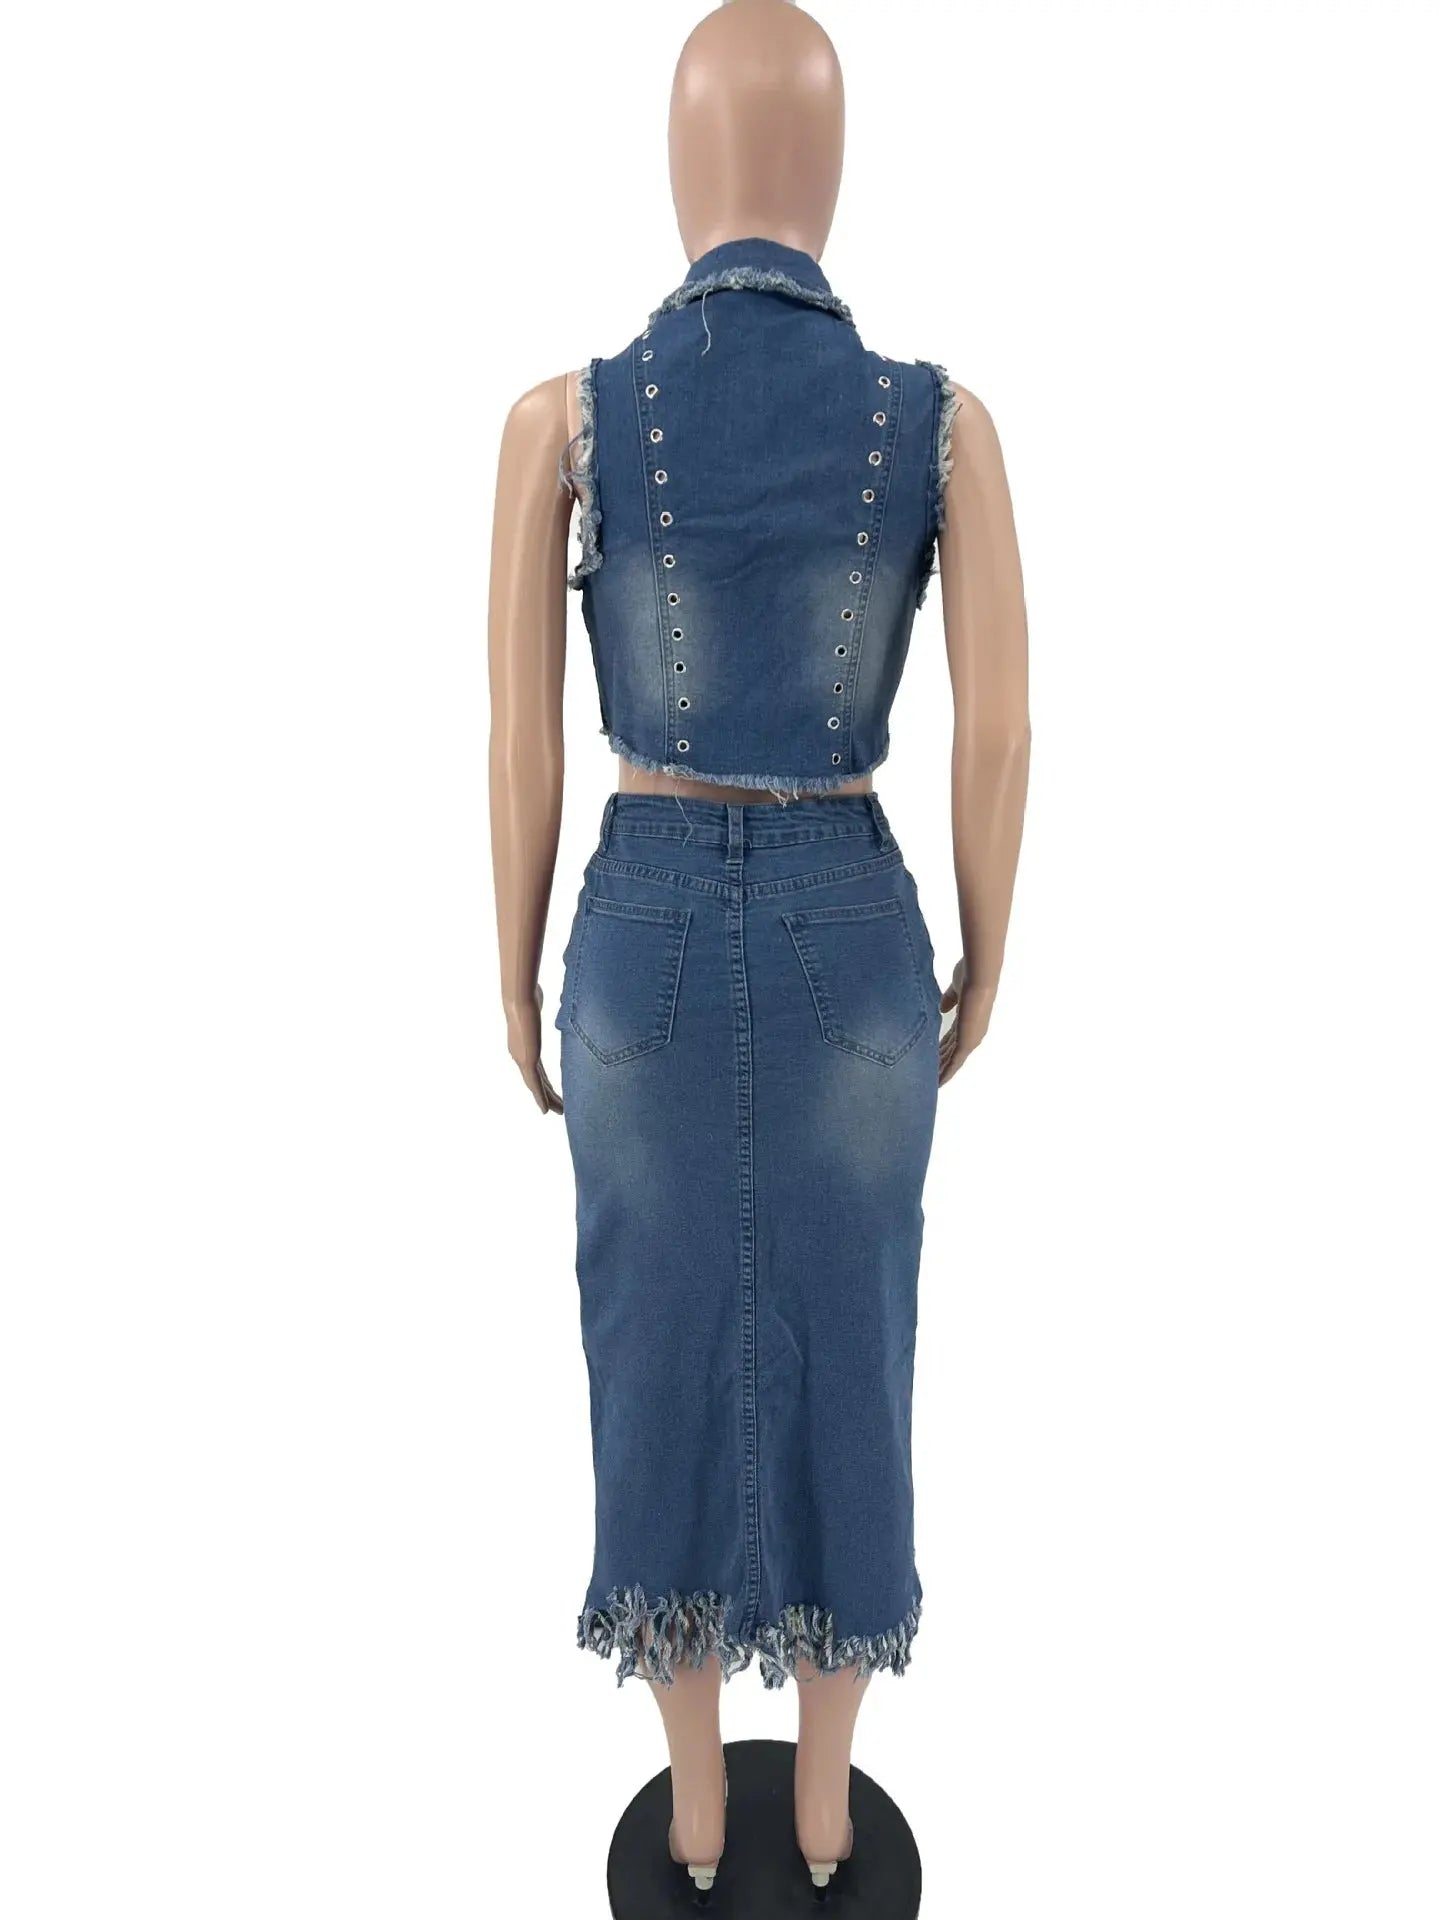 Vintage Denim Skirt Outfits Set Sexy Women Elegant Two Pieces Jeans Matching Set Top+Split Skirt aliexpress